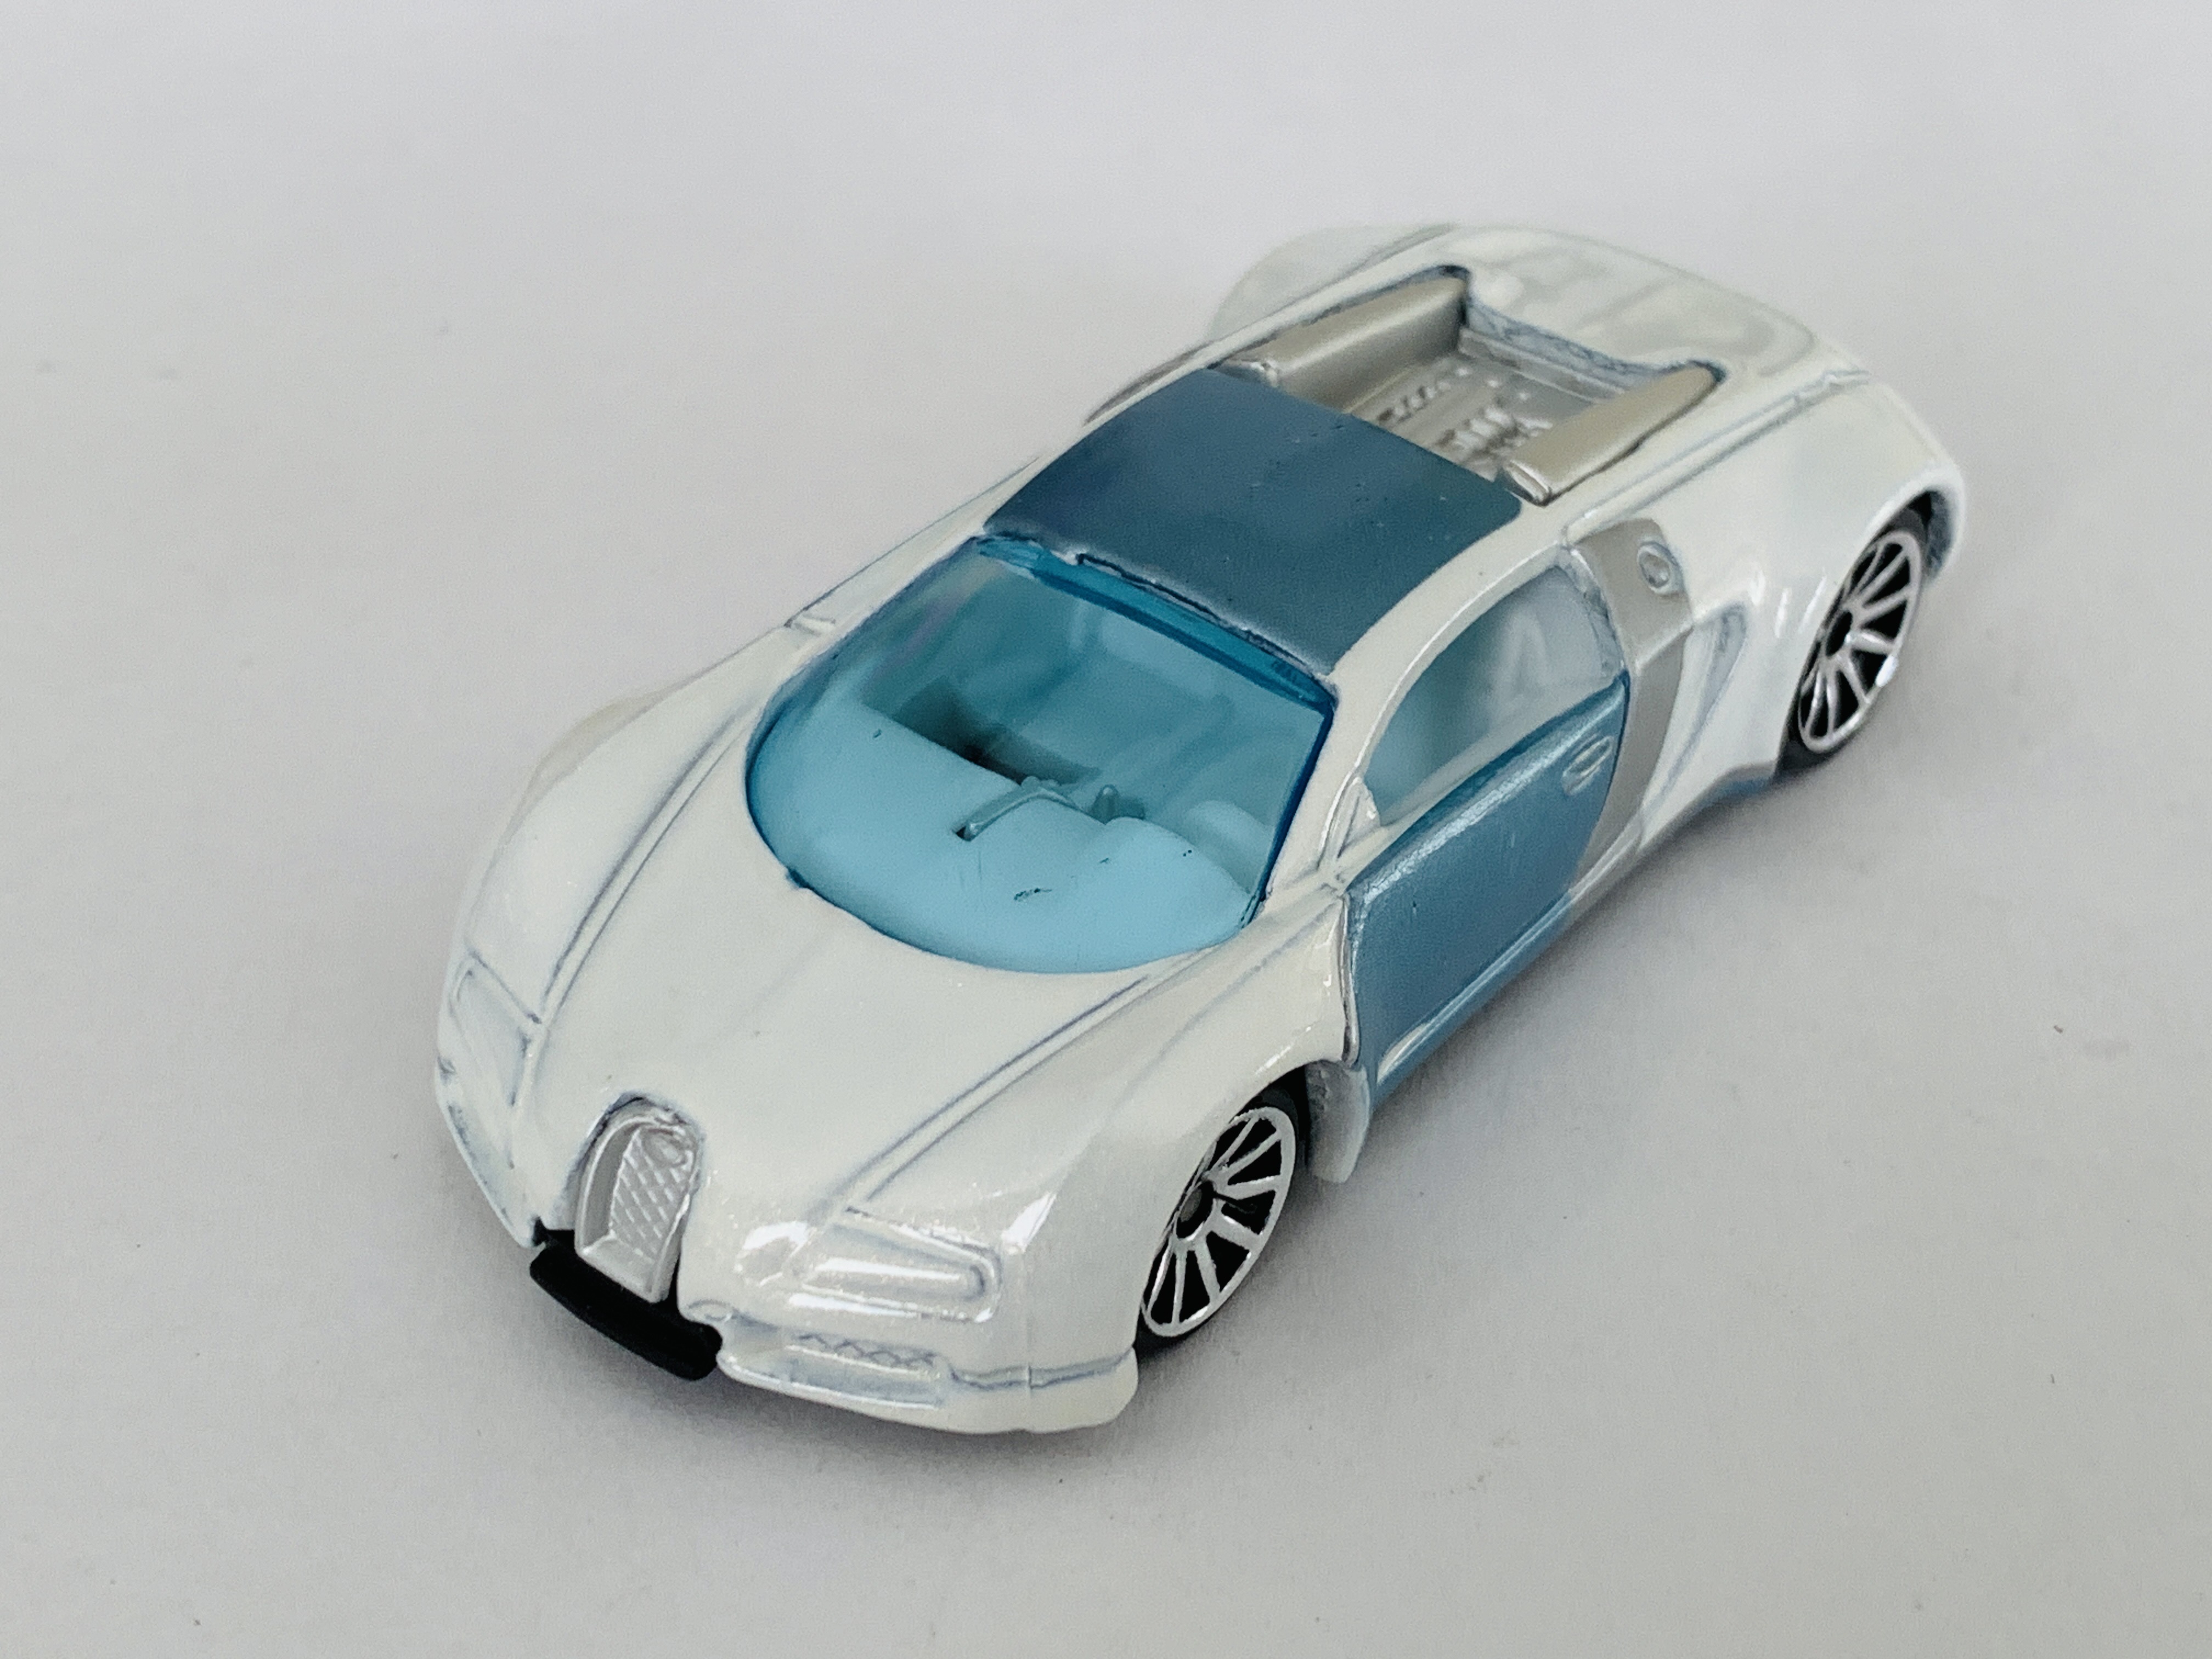 Hot Wheels 2007 Mystery Car Bugatti Veyron - White